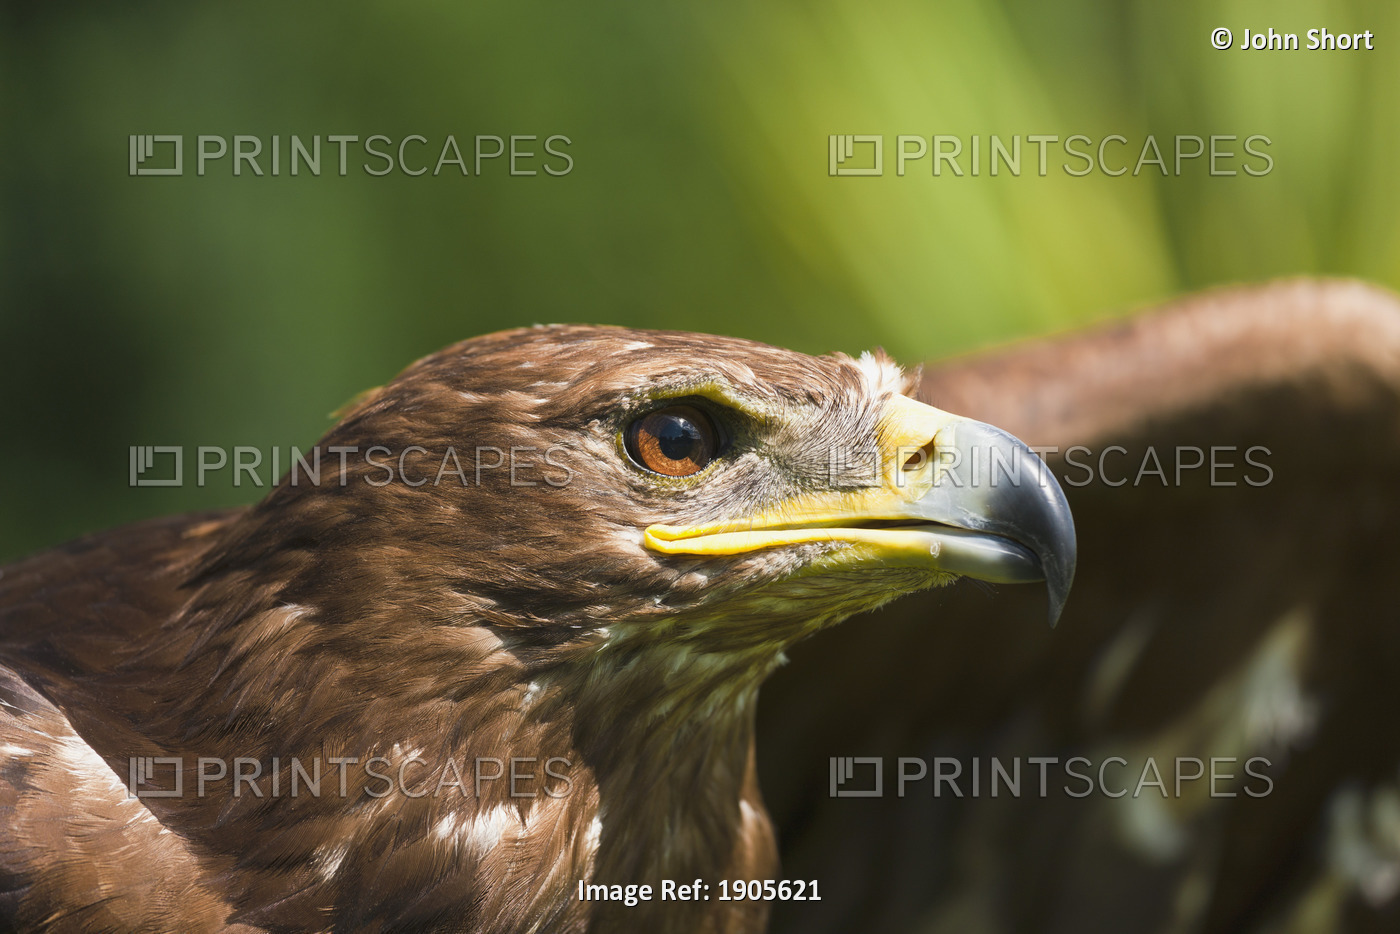 The Head Of An Eagle; Windermere, Cumbria, England